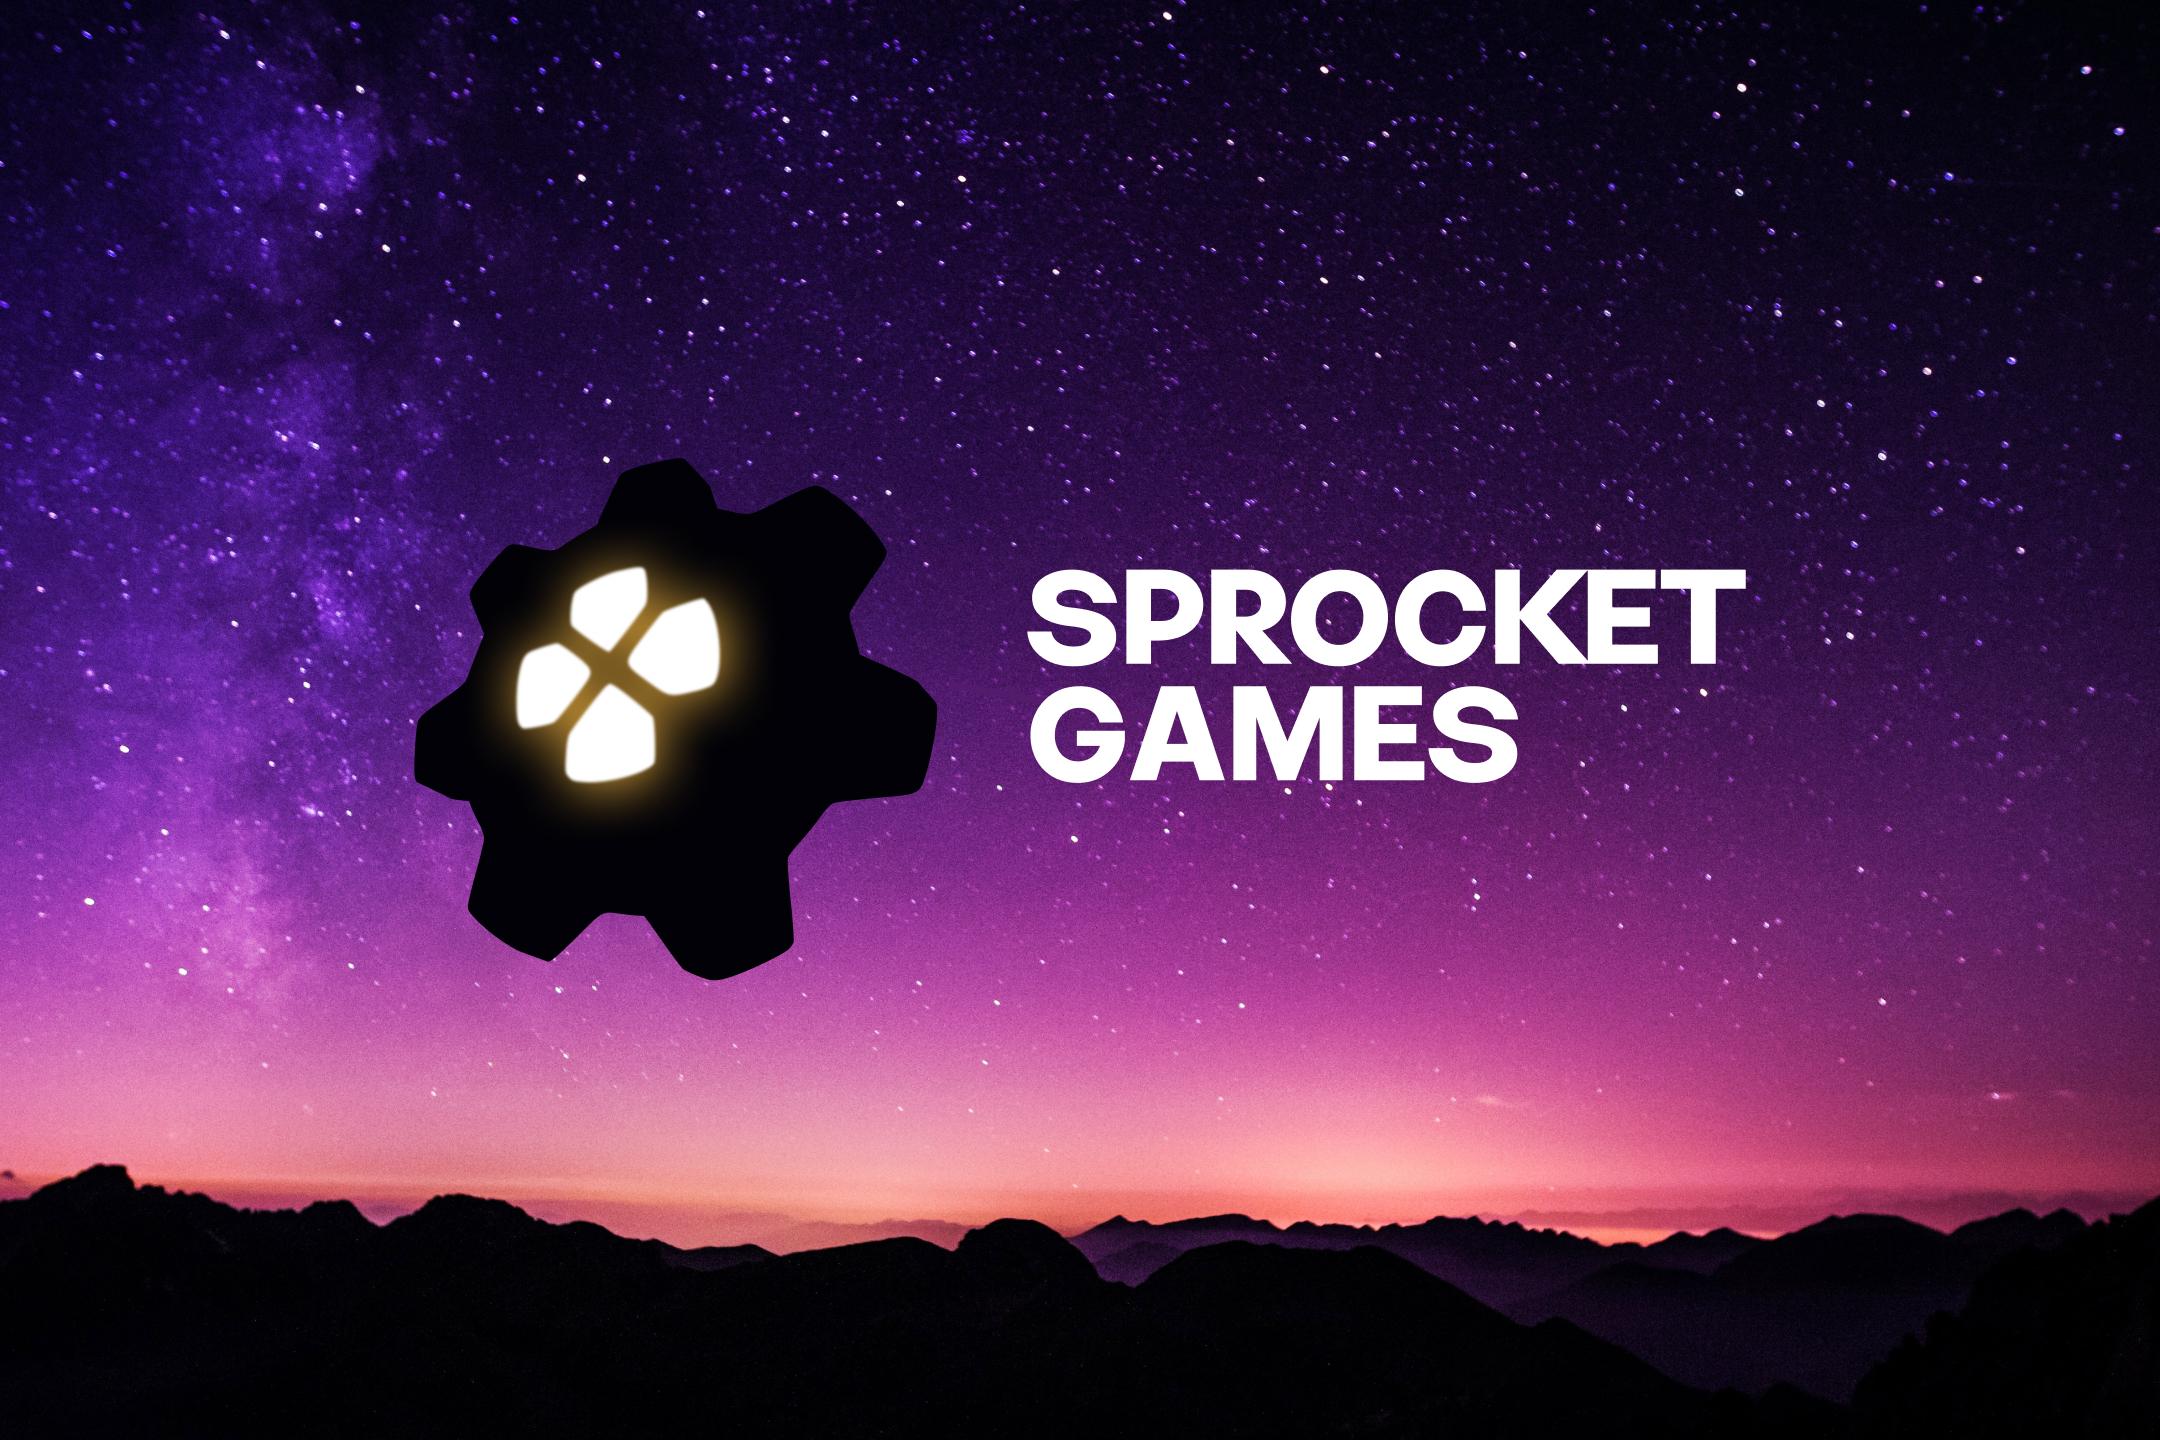 Sprocket games logo